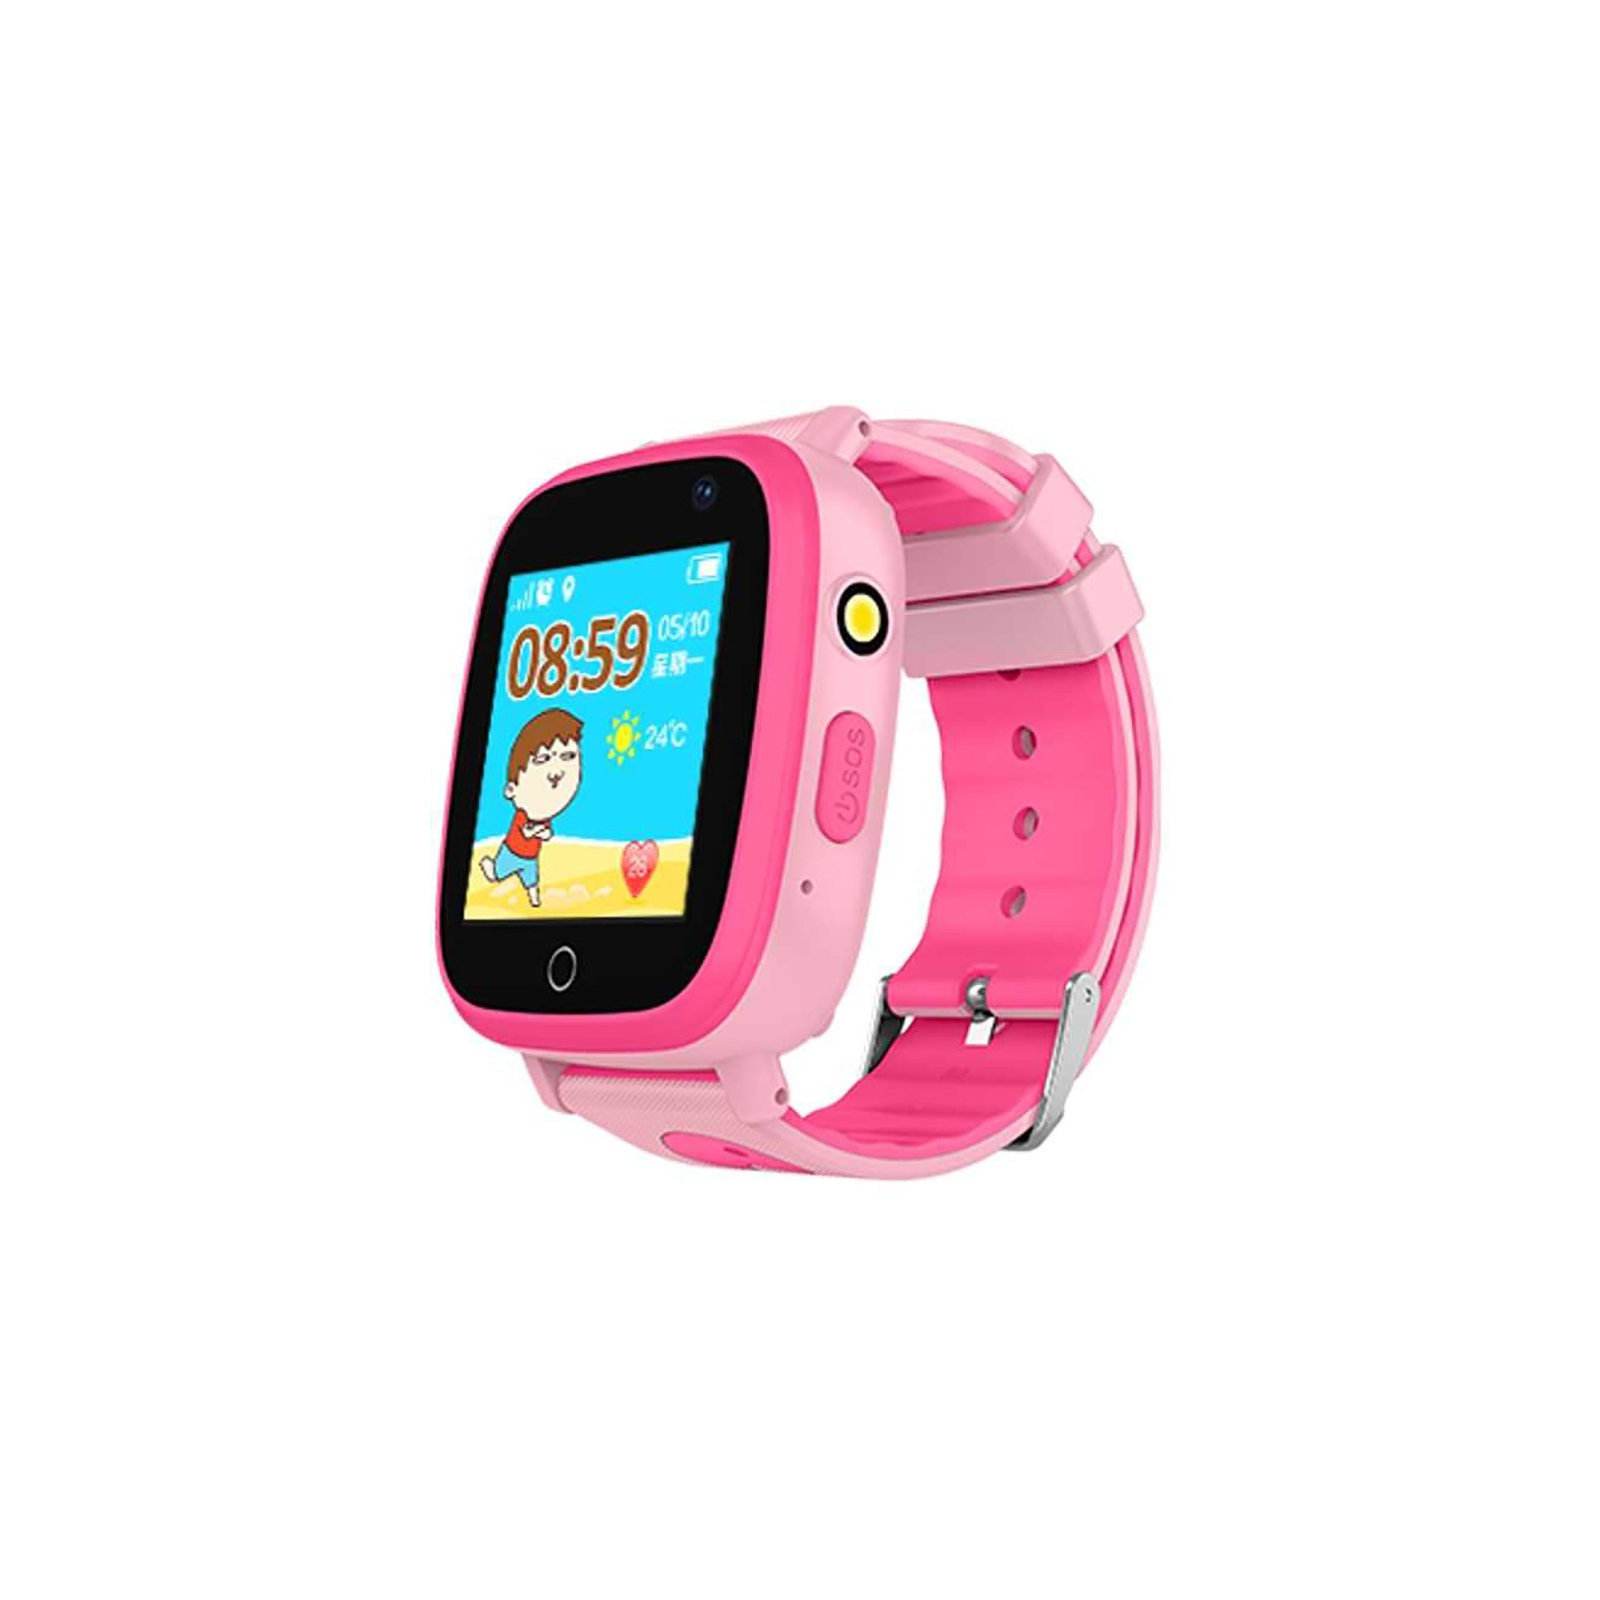 Смарт-годинник UWatch Q11 Kid smart watch Blue (F_87352)